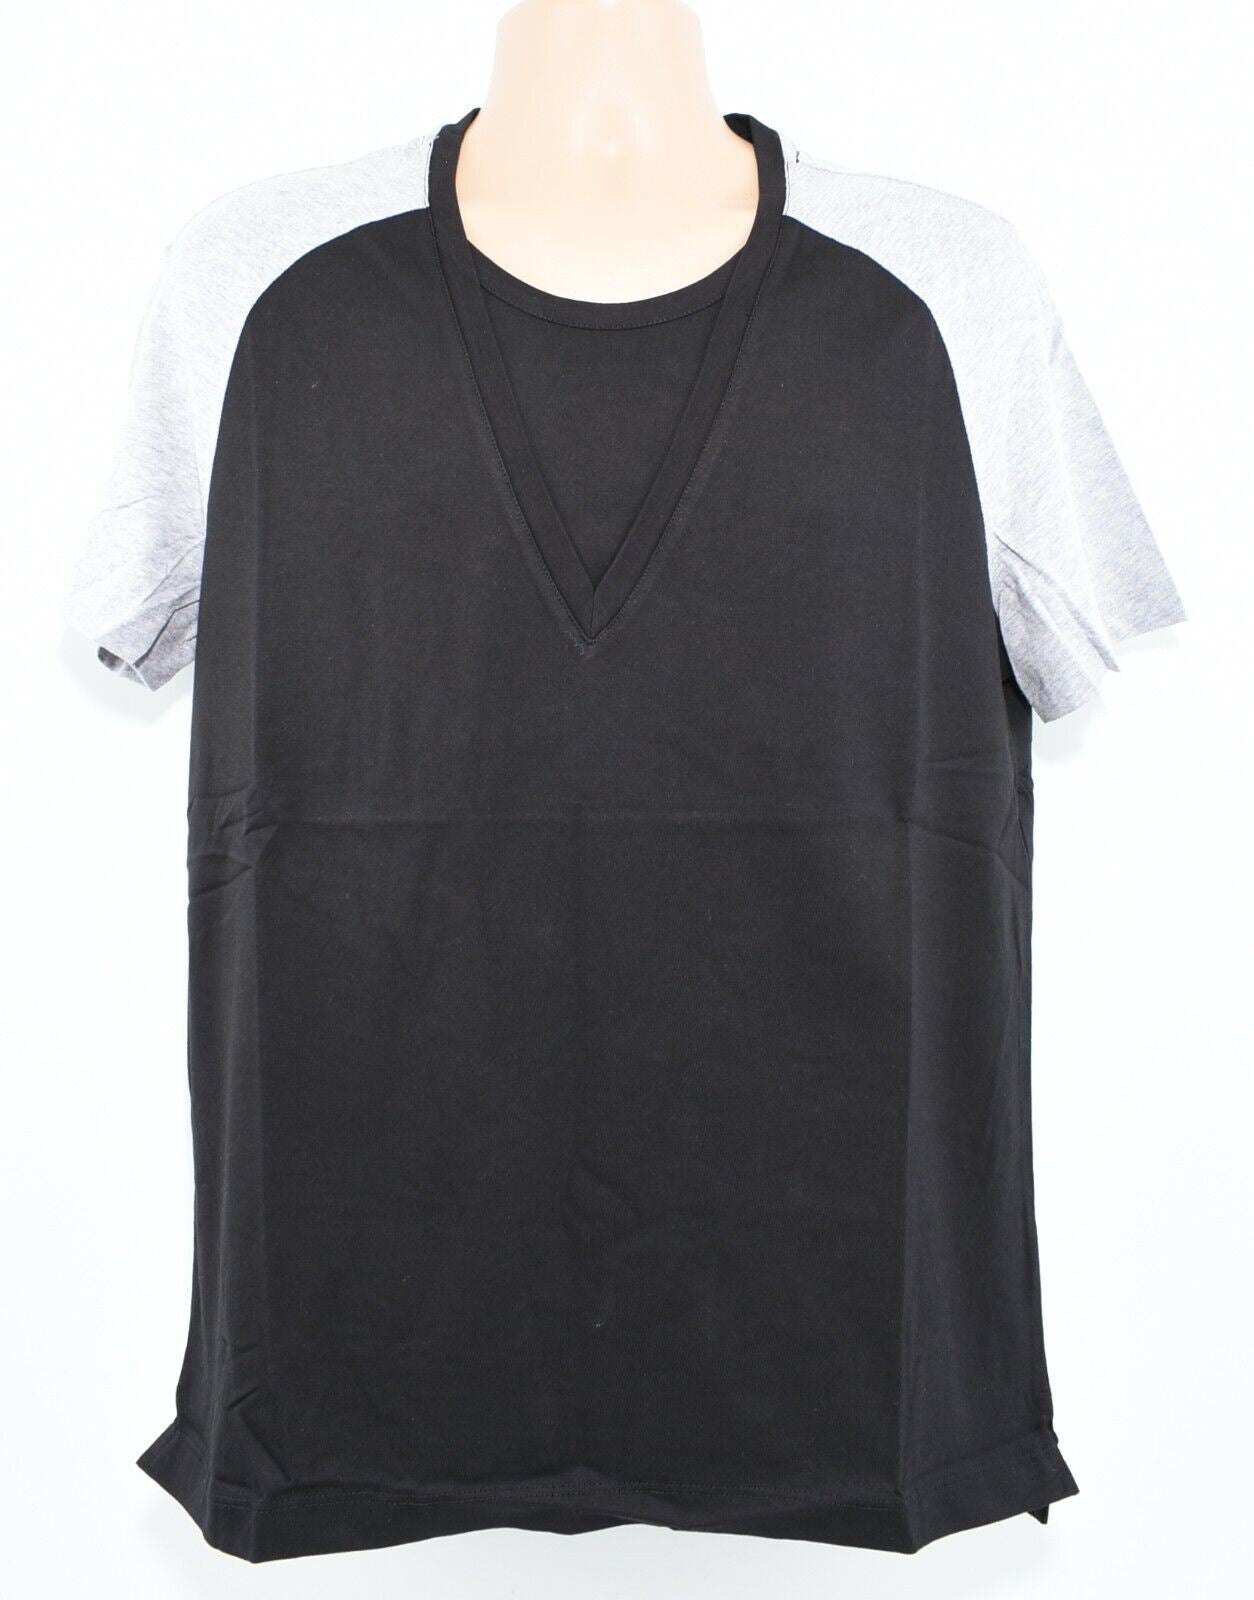 ERMANNO SCERVINO Mens T-shirt Top, Graphic Print at The Back, Black/Grey, size L